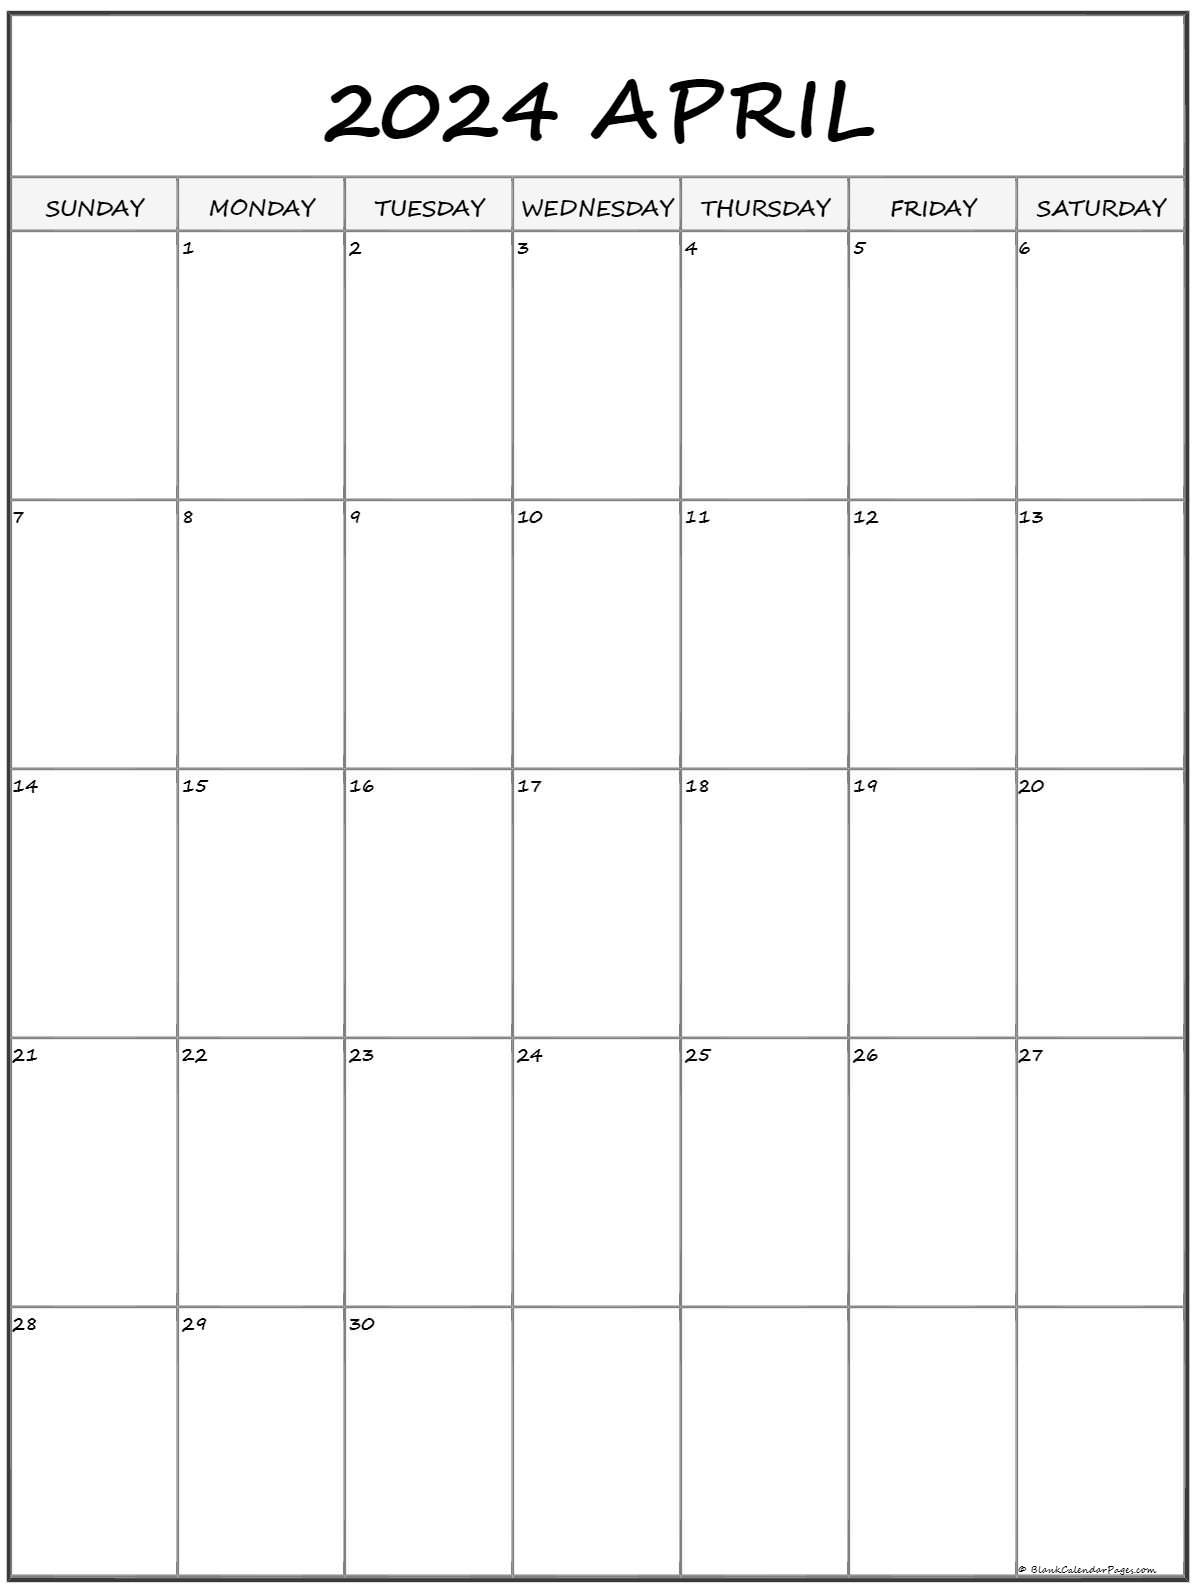 april-2023-calendar-free-printable-calendar-april-2023-calendar-free